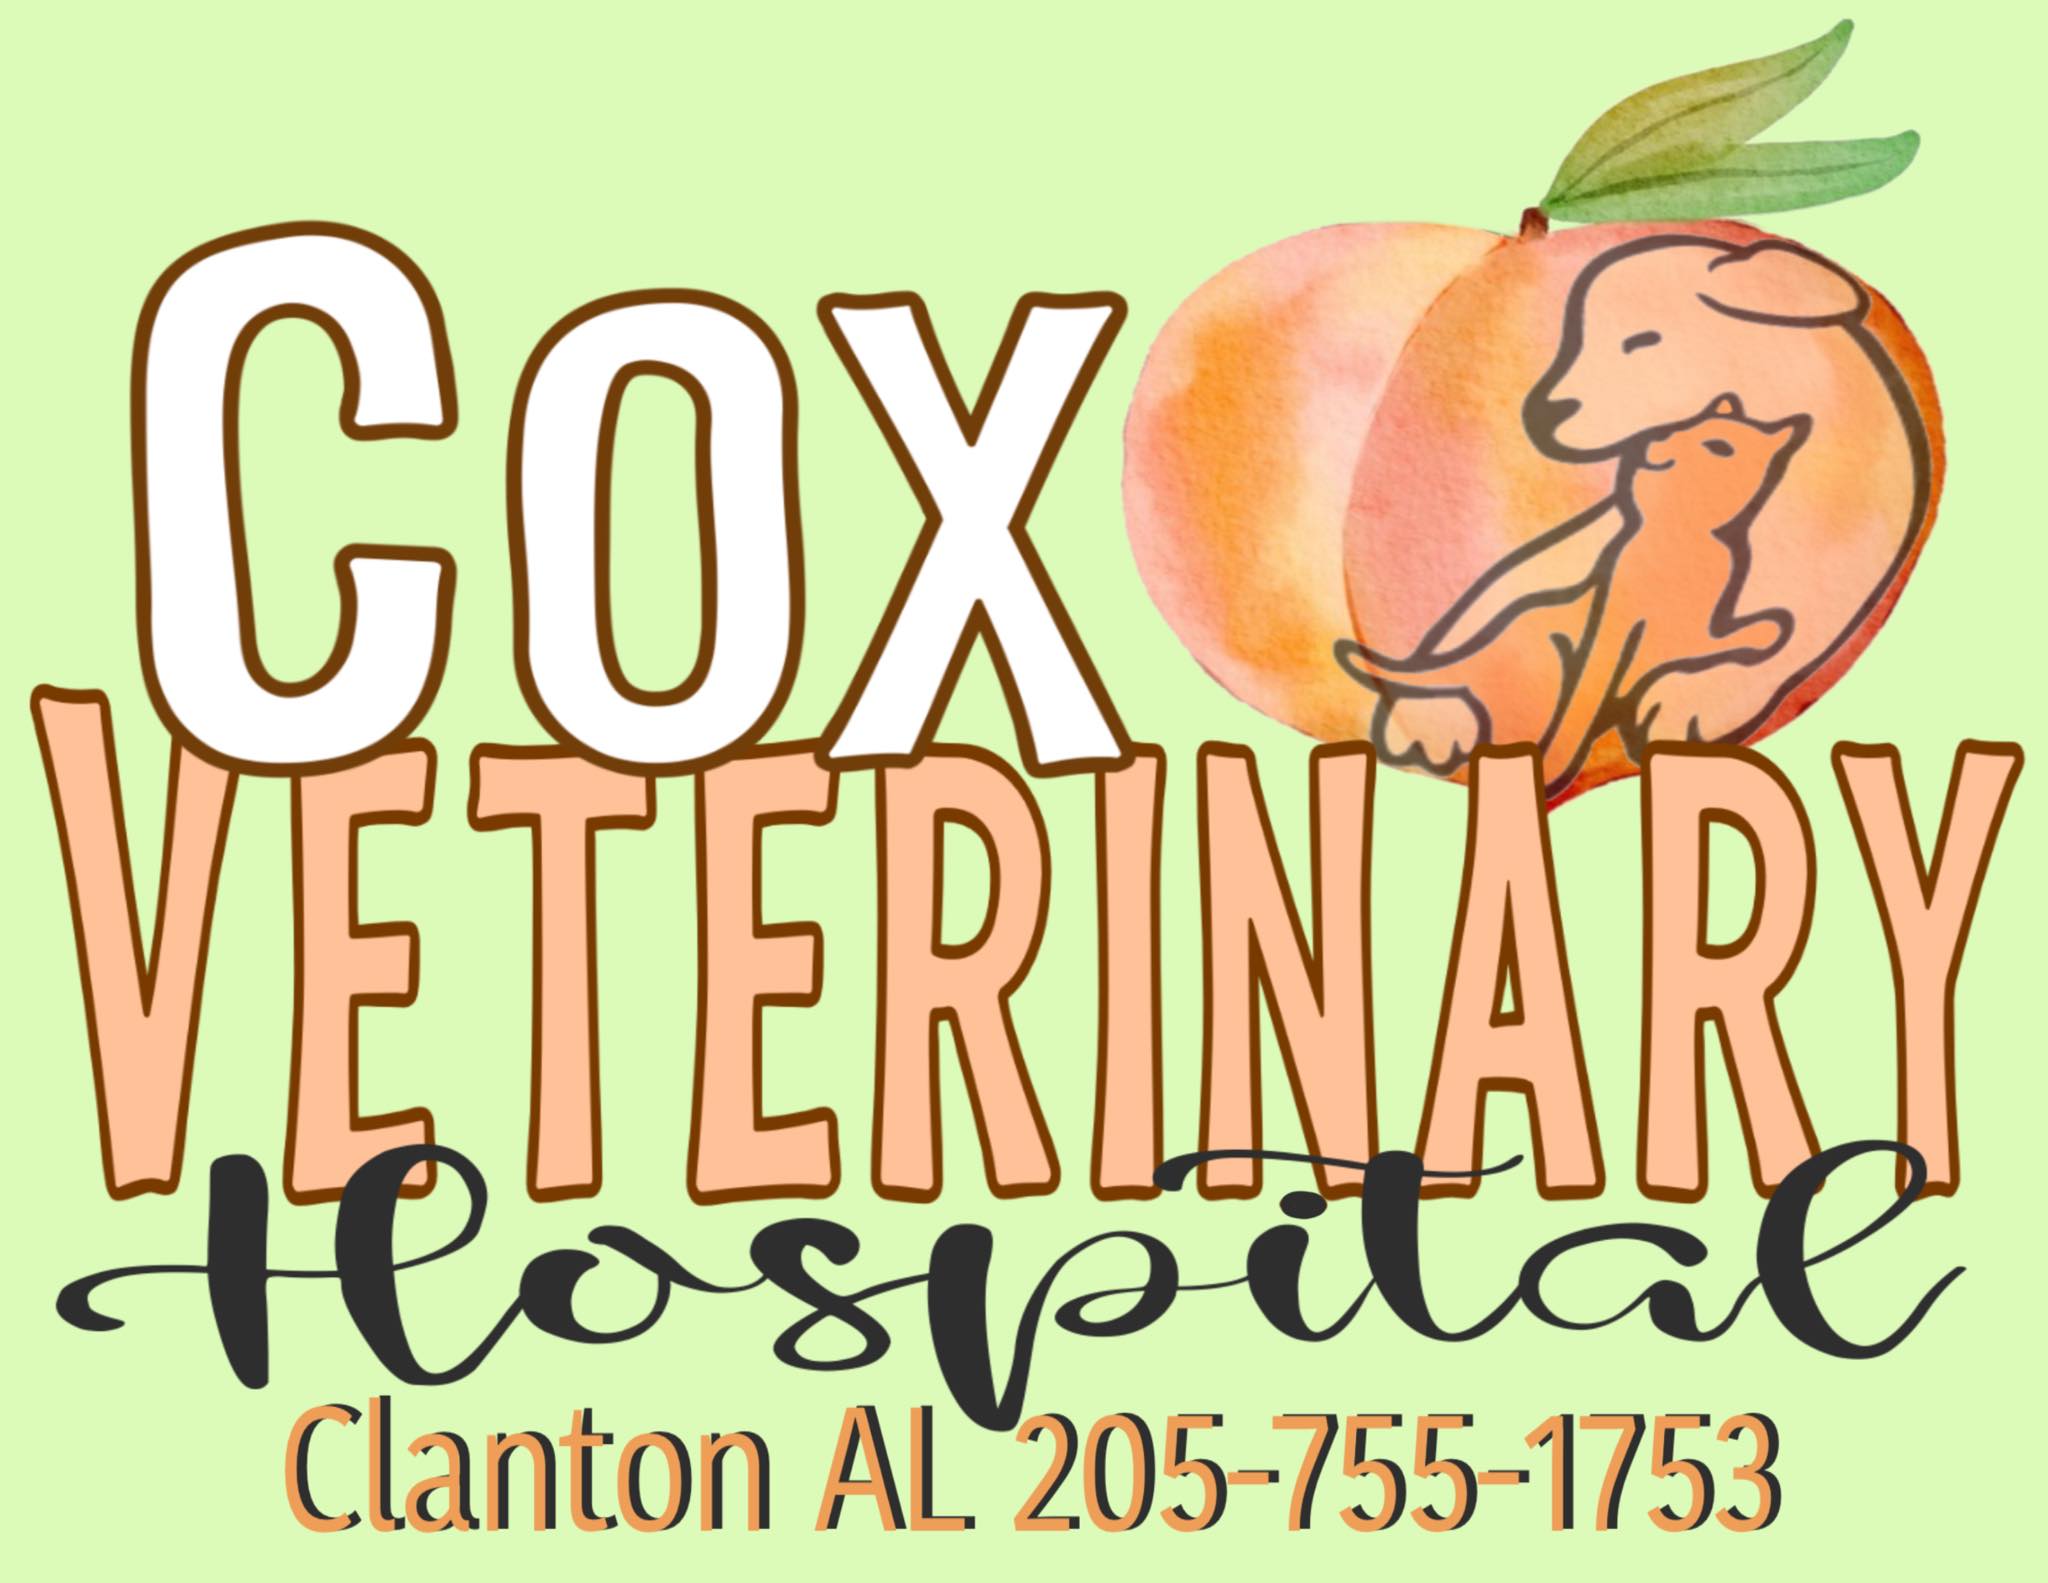 Cox Veterinary Hospital PC 3403 7th St N, Clanton Alabama 35045